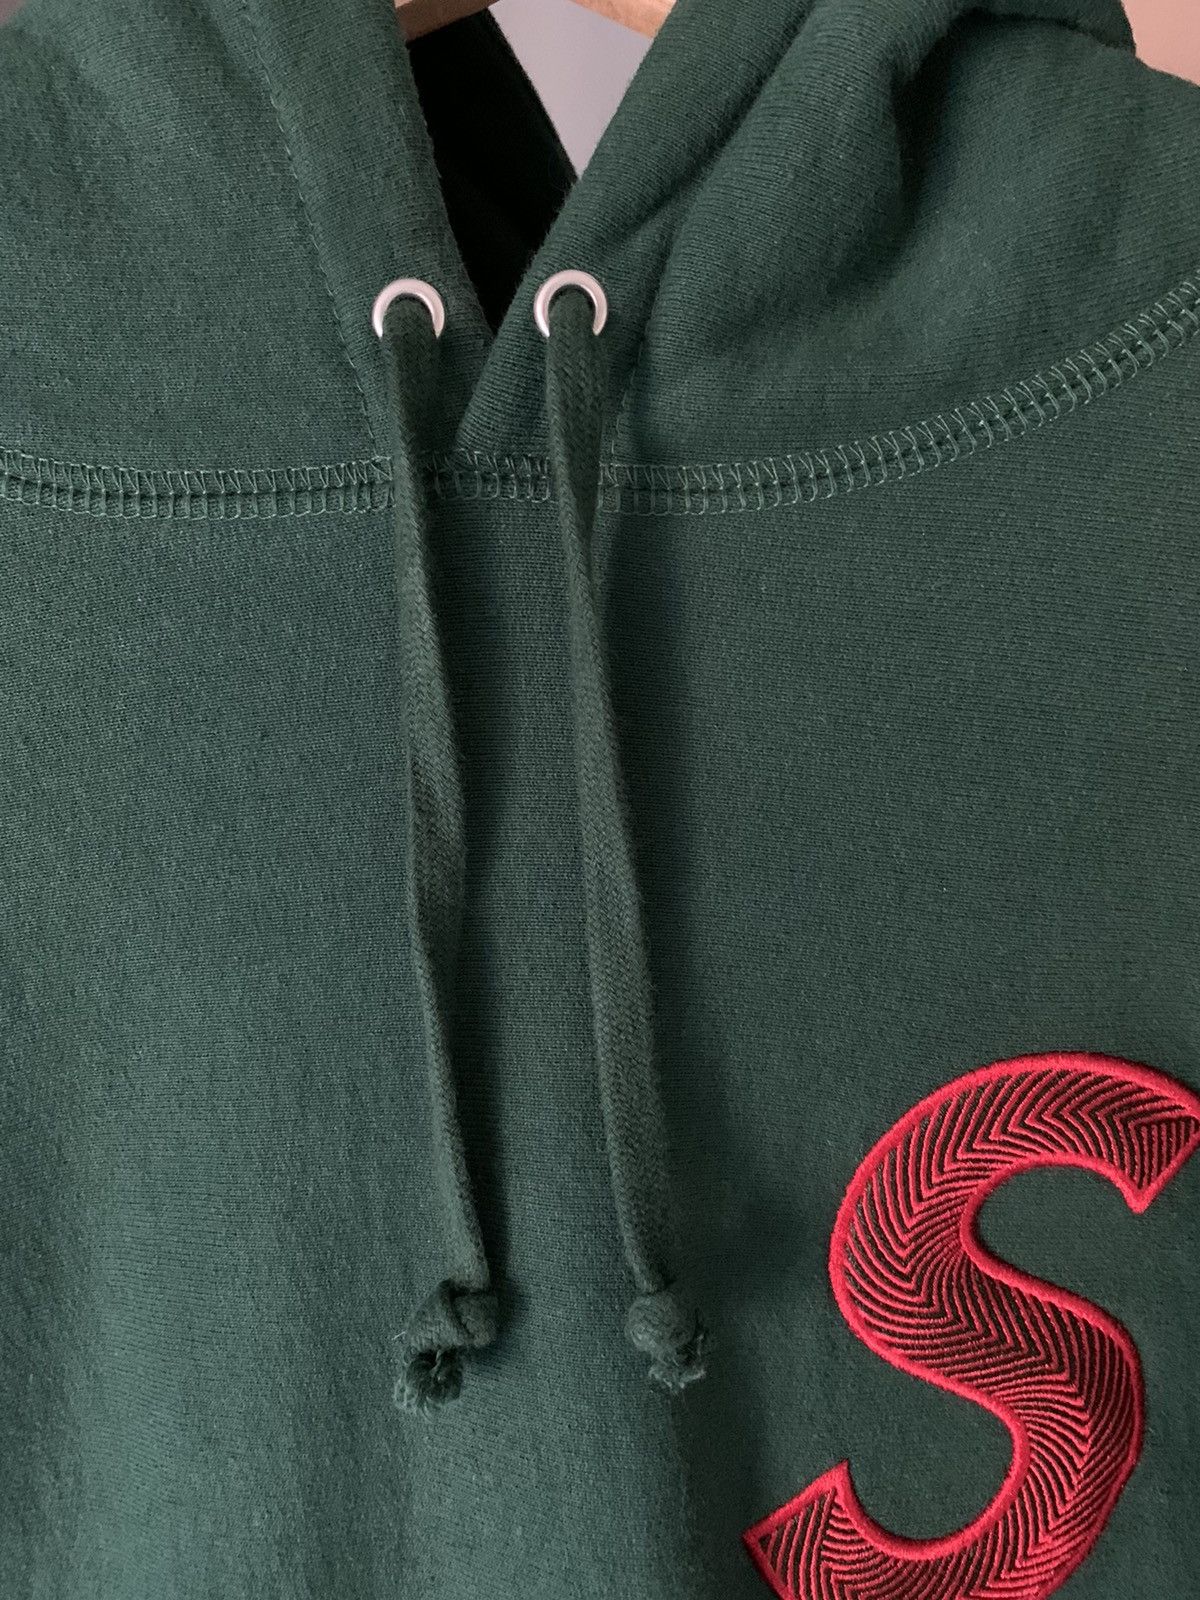 Supreme Supreme S Logo Hooded Sweatshirt FW18 Dark Green Size US M / EU 48-50 / 2 - 2 Preview